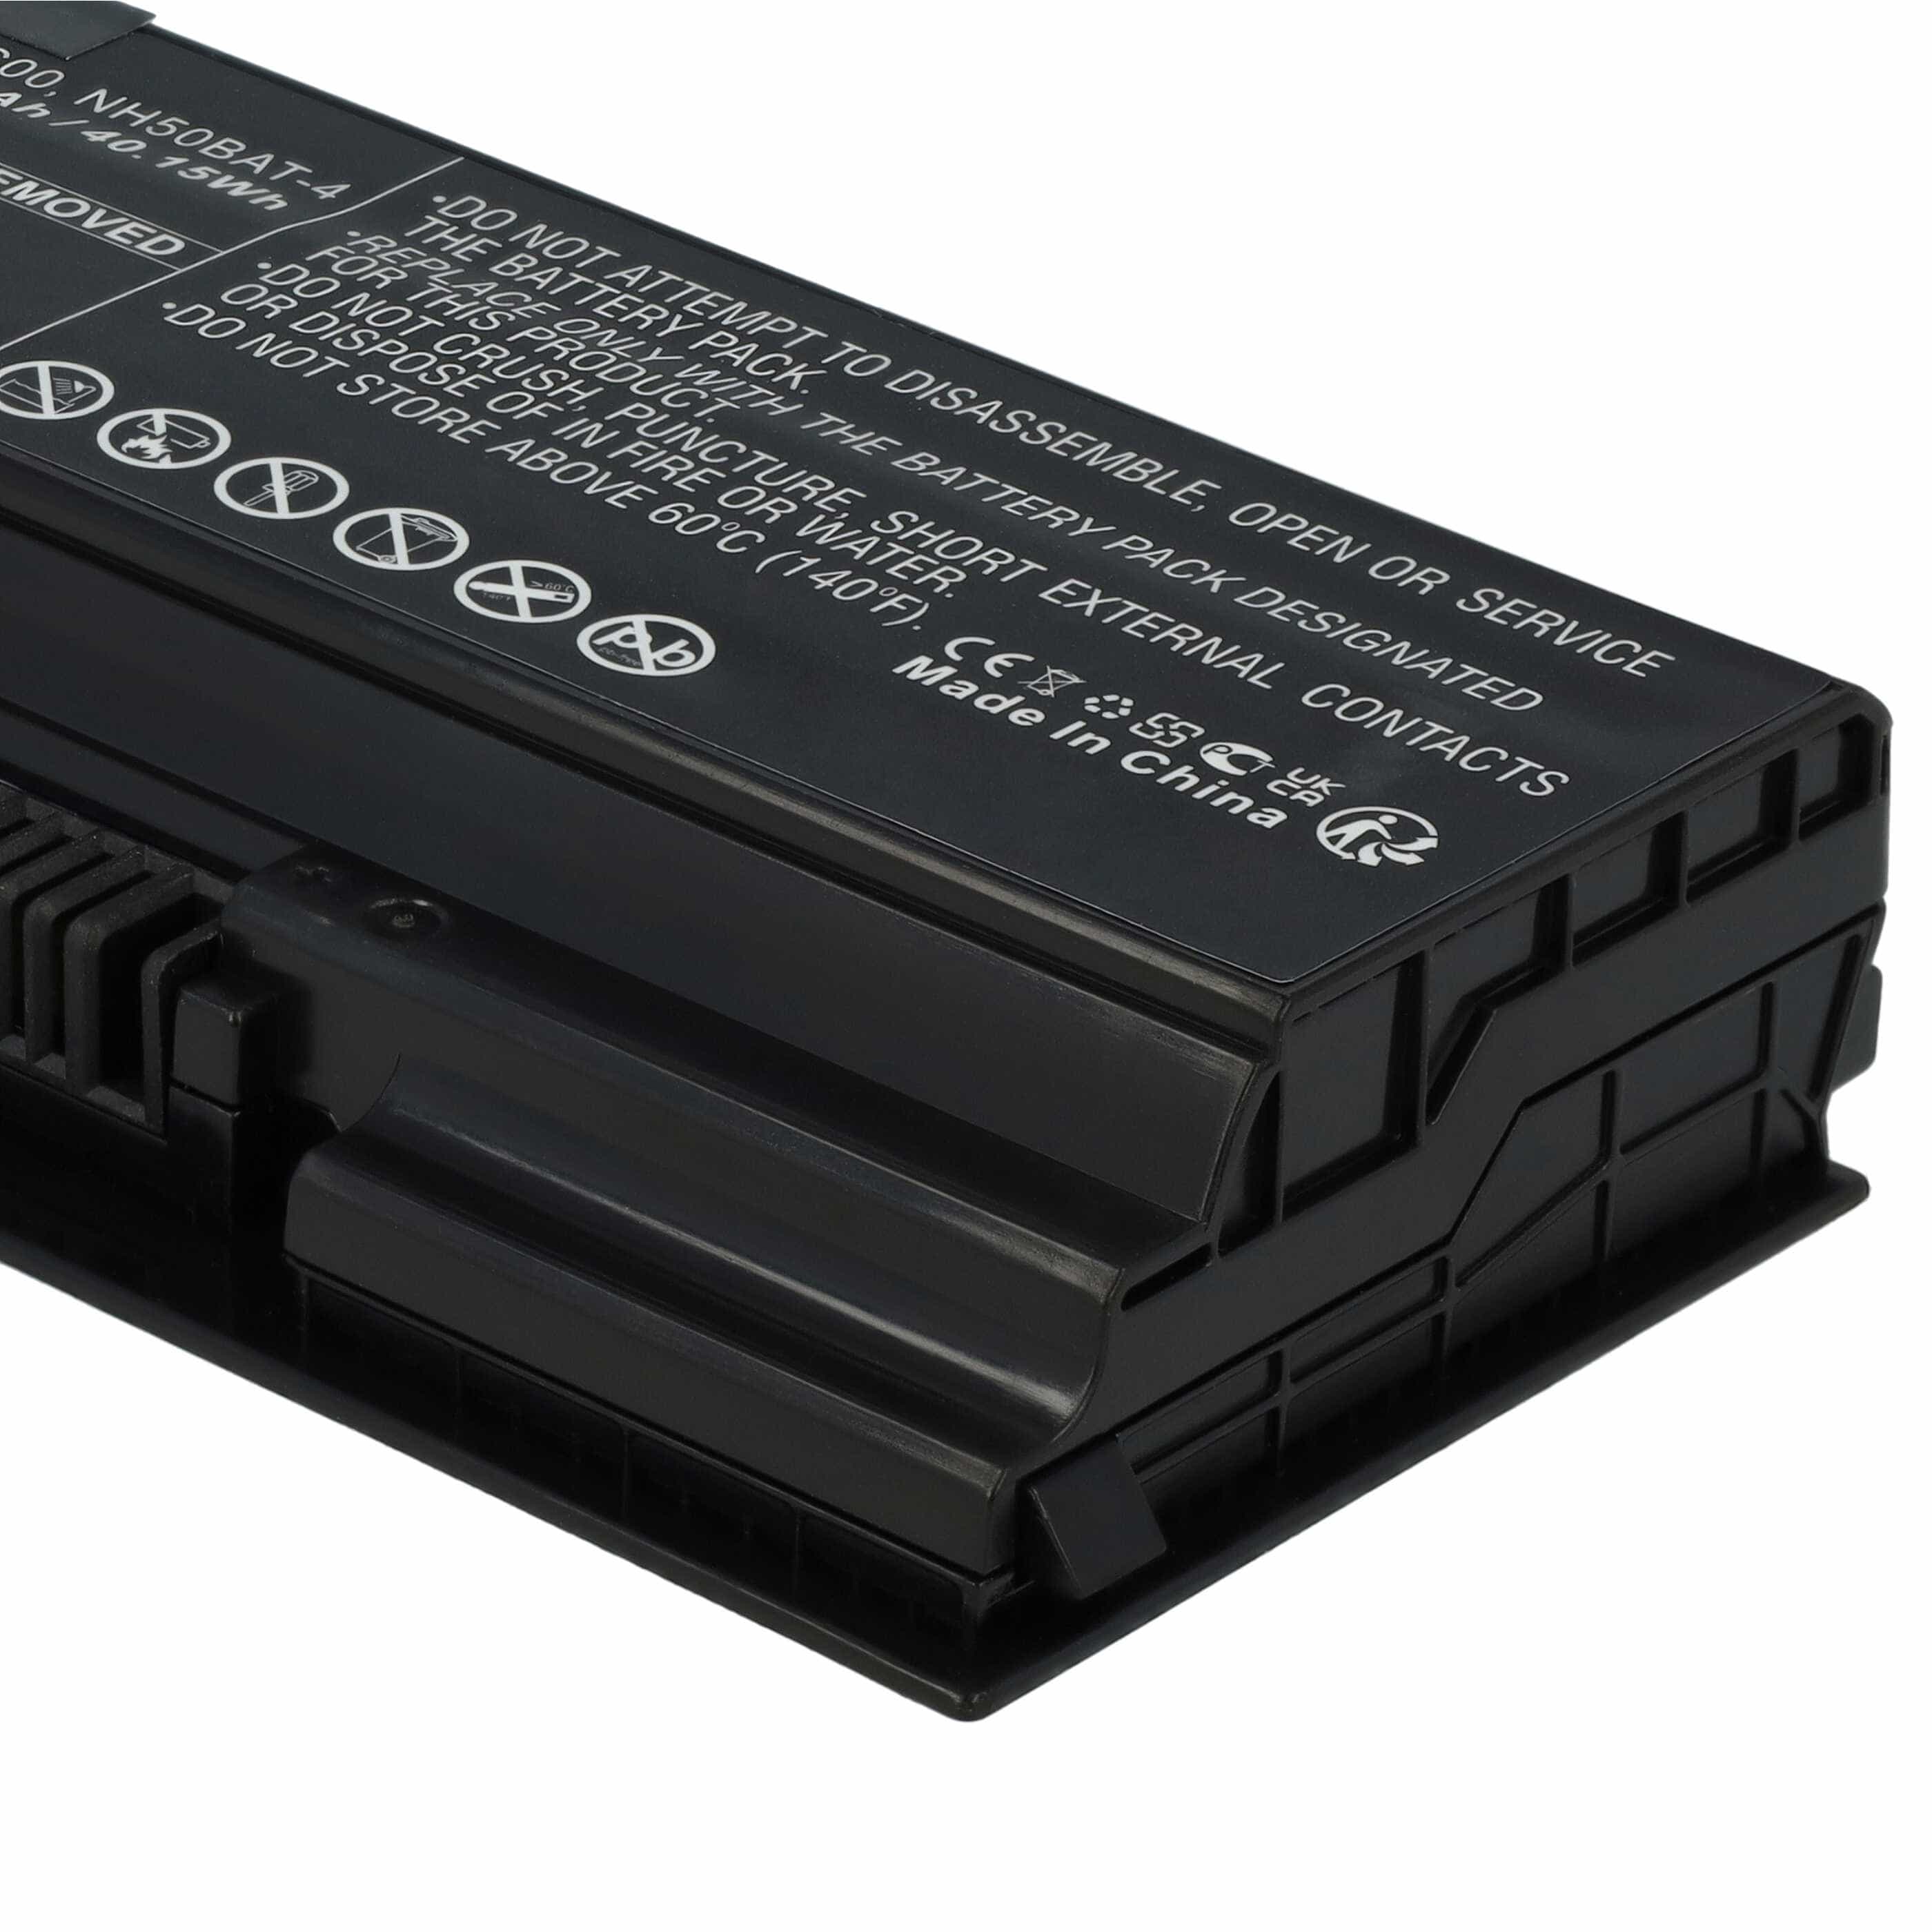 Batteria sostituisce Clevo NH50BAT-4, 6-87-NH50S-41C00 per notebook Gigabyte - 2750mAh 14,6V Li-Ion